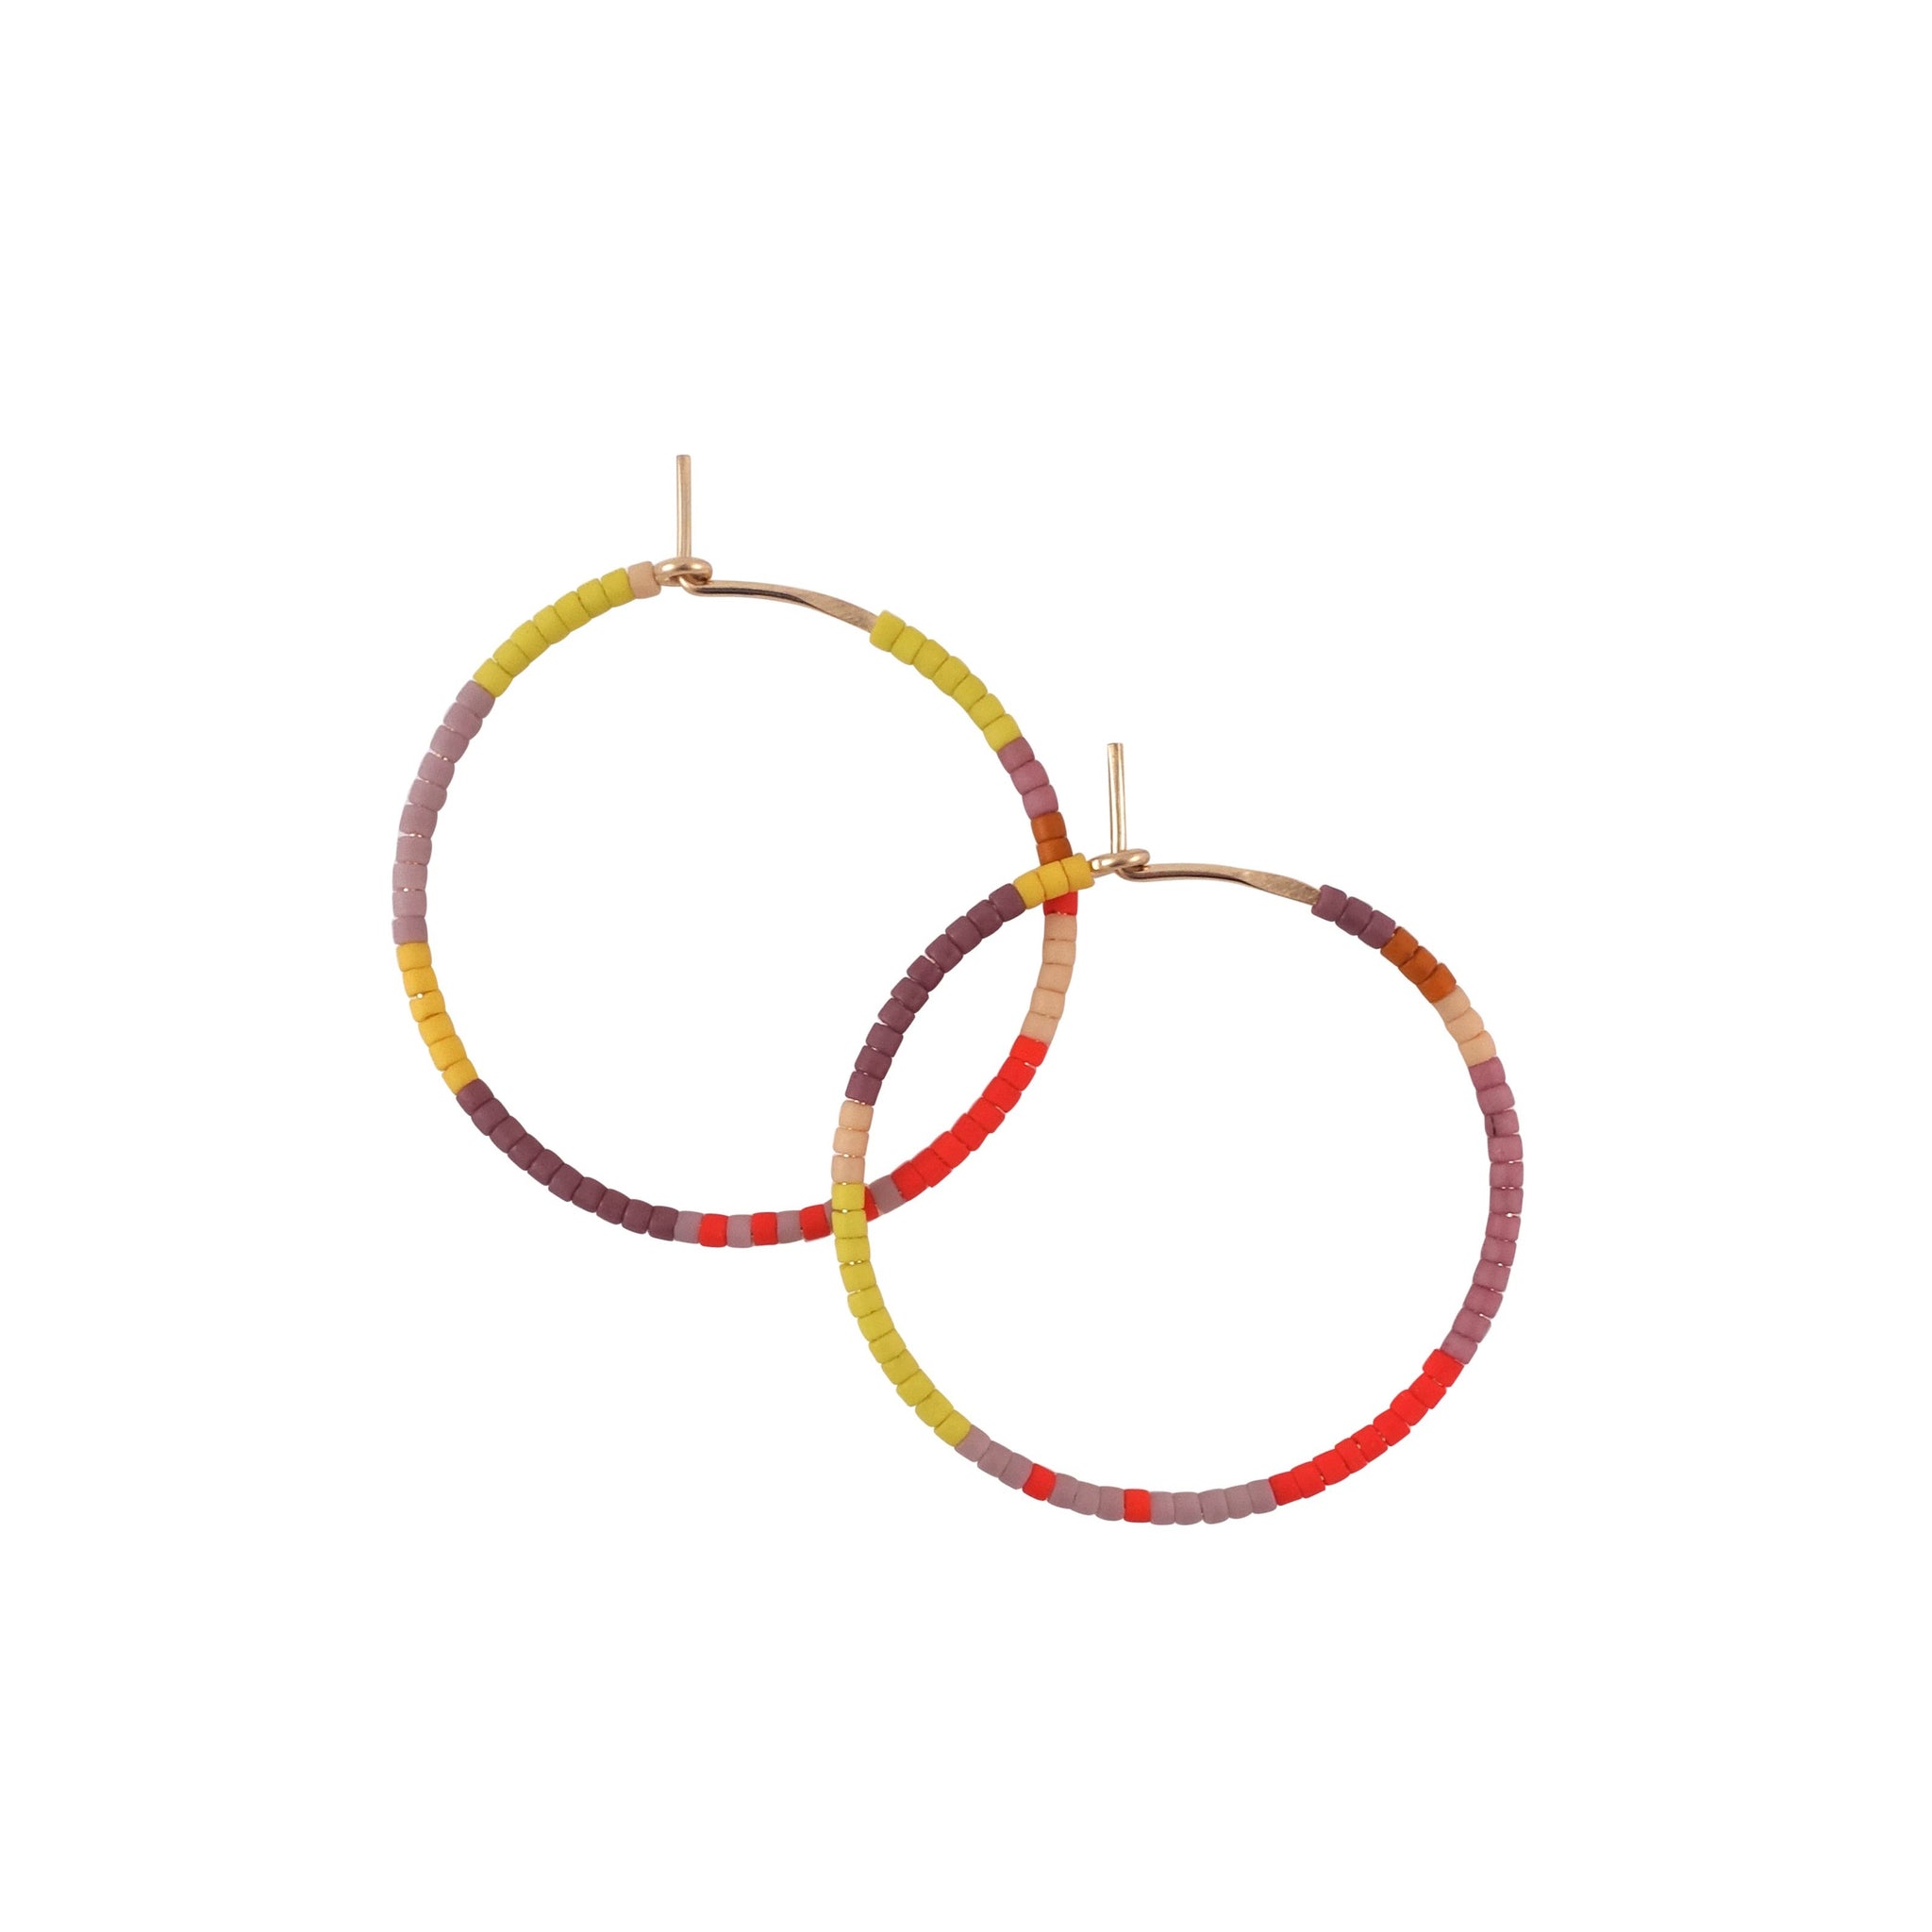 14k gold-filled hoop, Japanese Miyuki matte glass beads, purple, red, yellow..